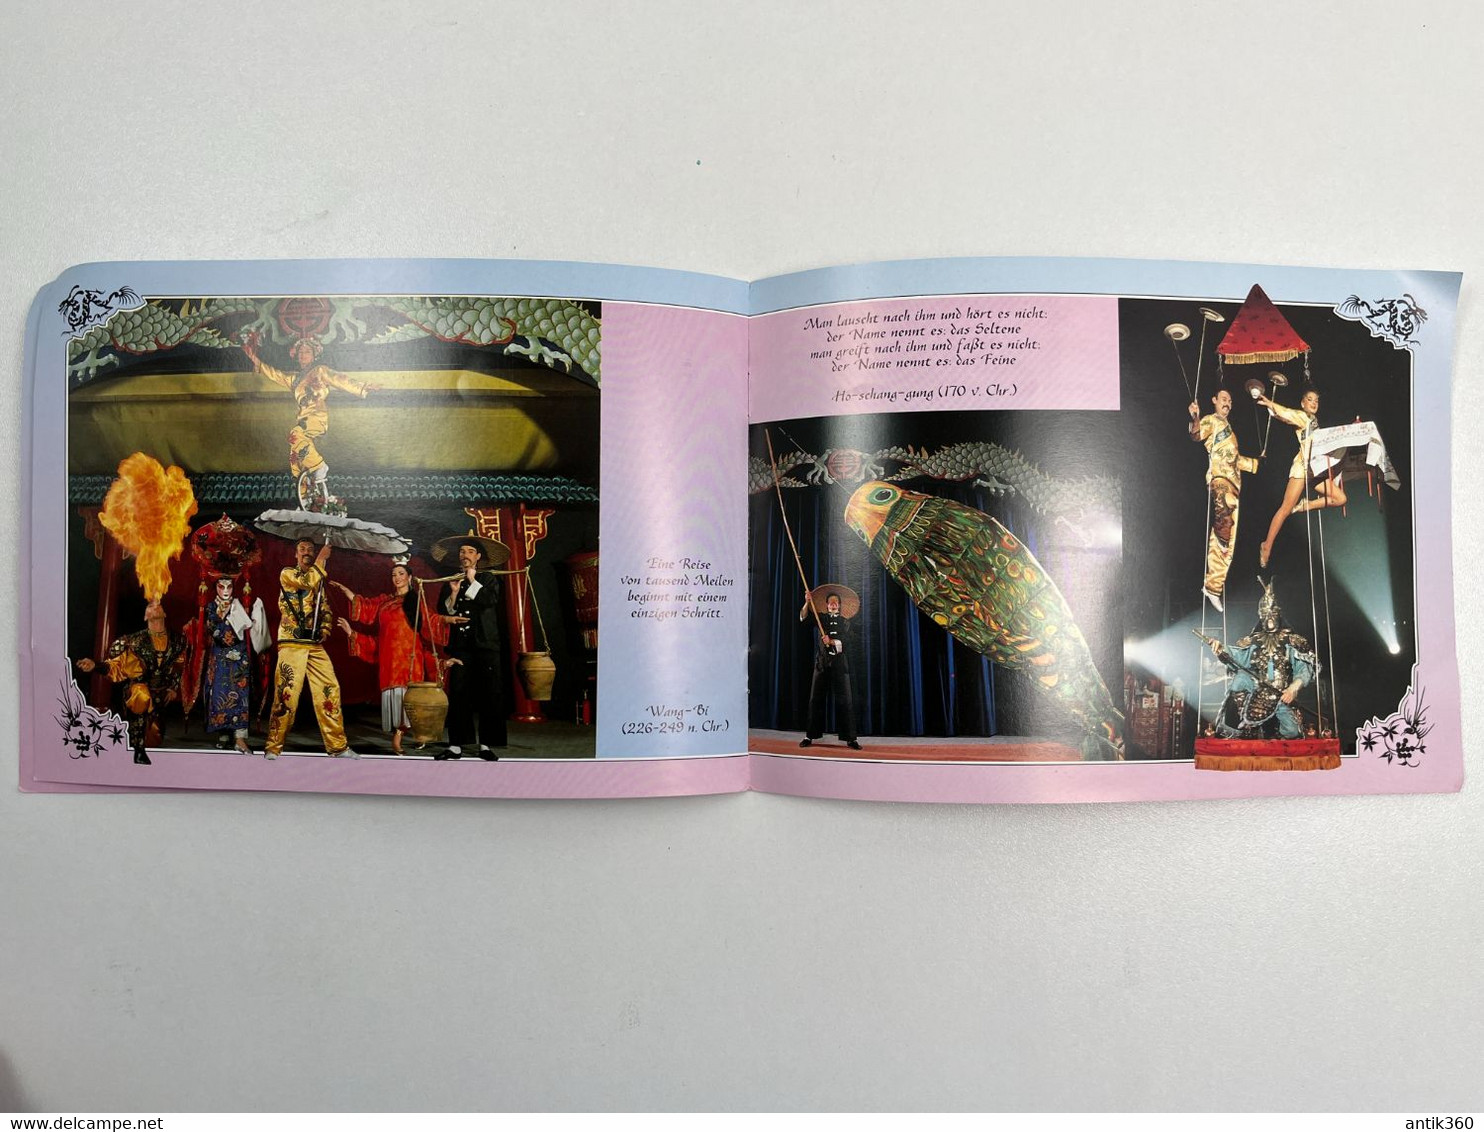 Cirque - Brochure Spectacle Acrobates Jongleurs China Show Sun Tseng Hai - Allemagne - Programmes